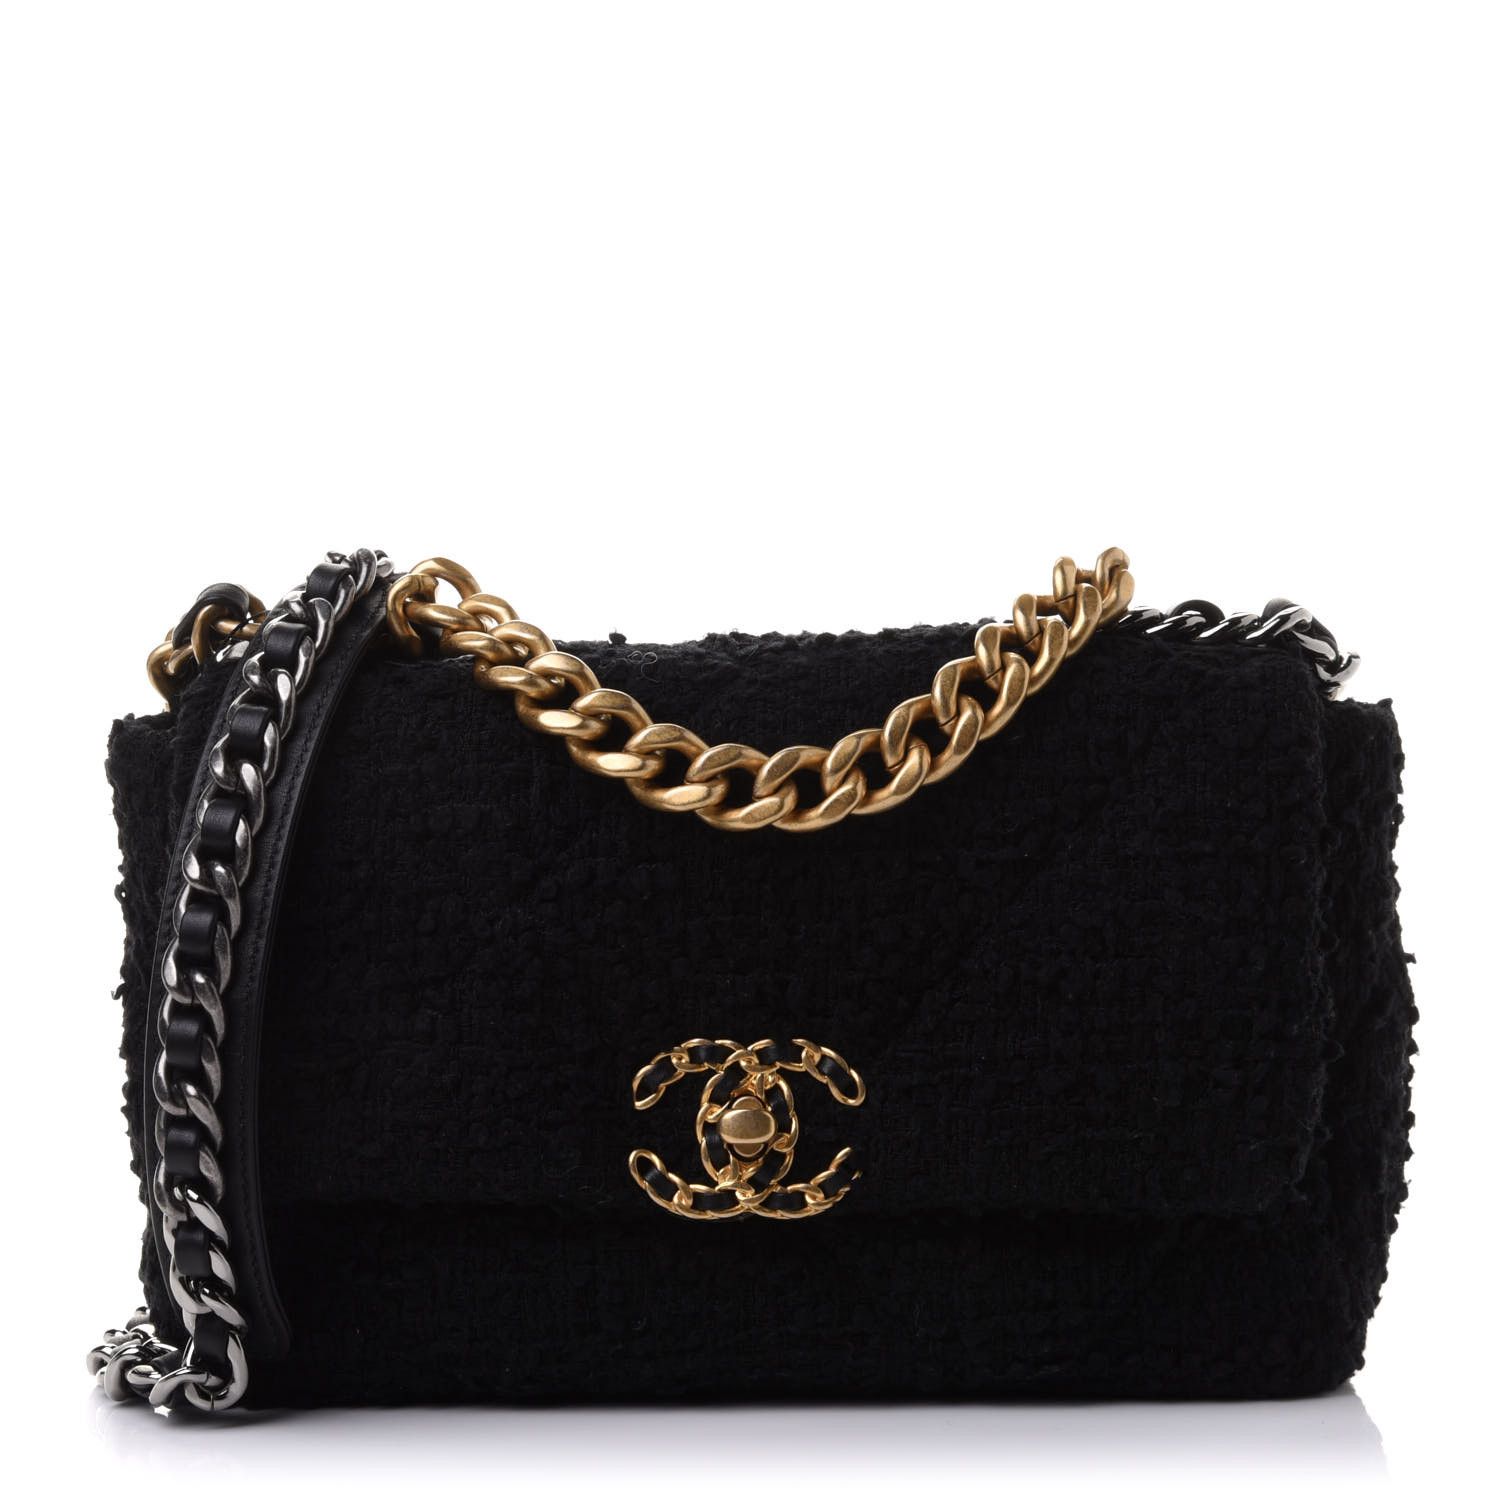 CHANEL

Tweed Quilted Medium Chanel 19 Flap Black | Fashionphile